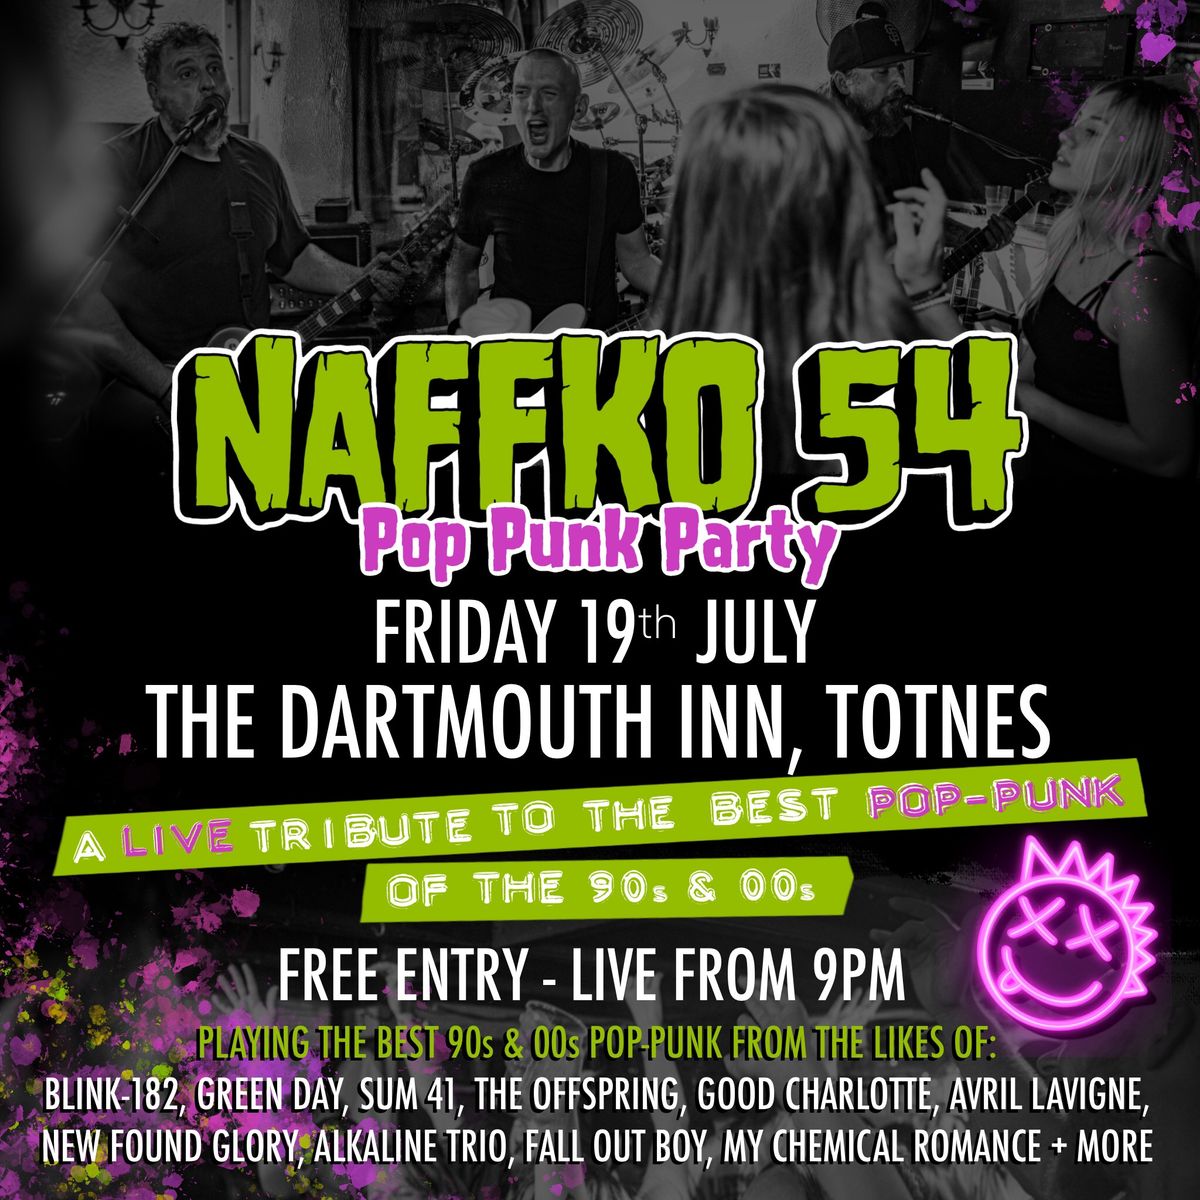 NaffKo 54 - Pop Punk Party Live @ The Dartmouth Inn, Totnes